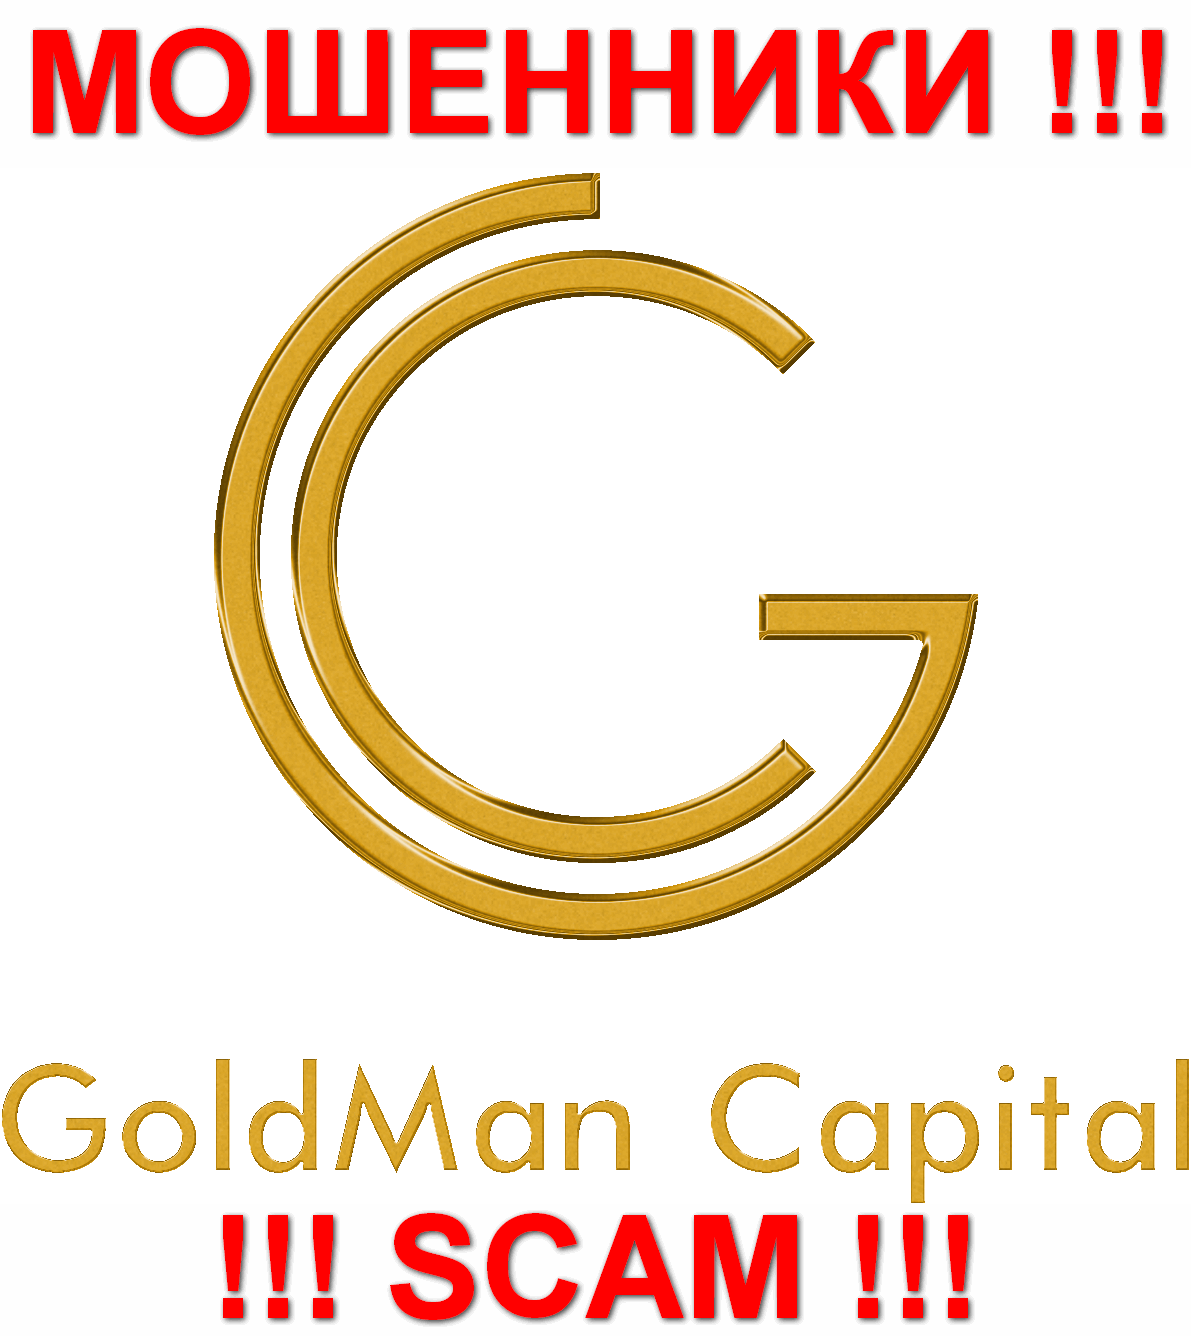 GoldMan Capital - ОБМАНЩИКИ !!! SCAM !!!